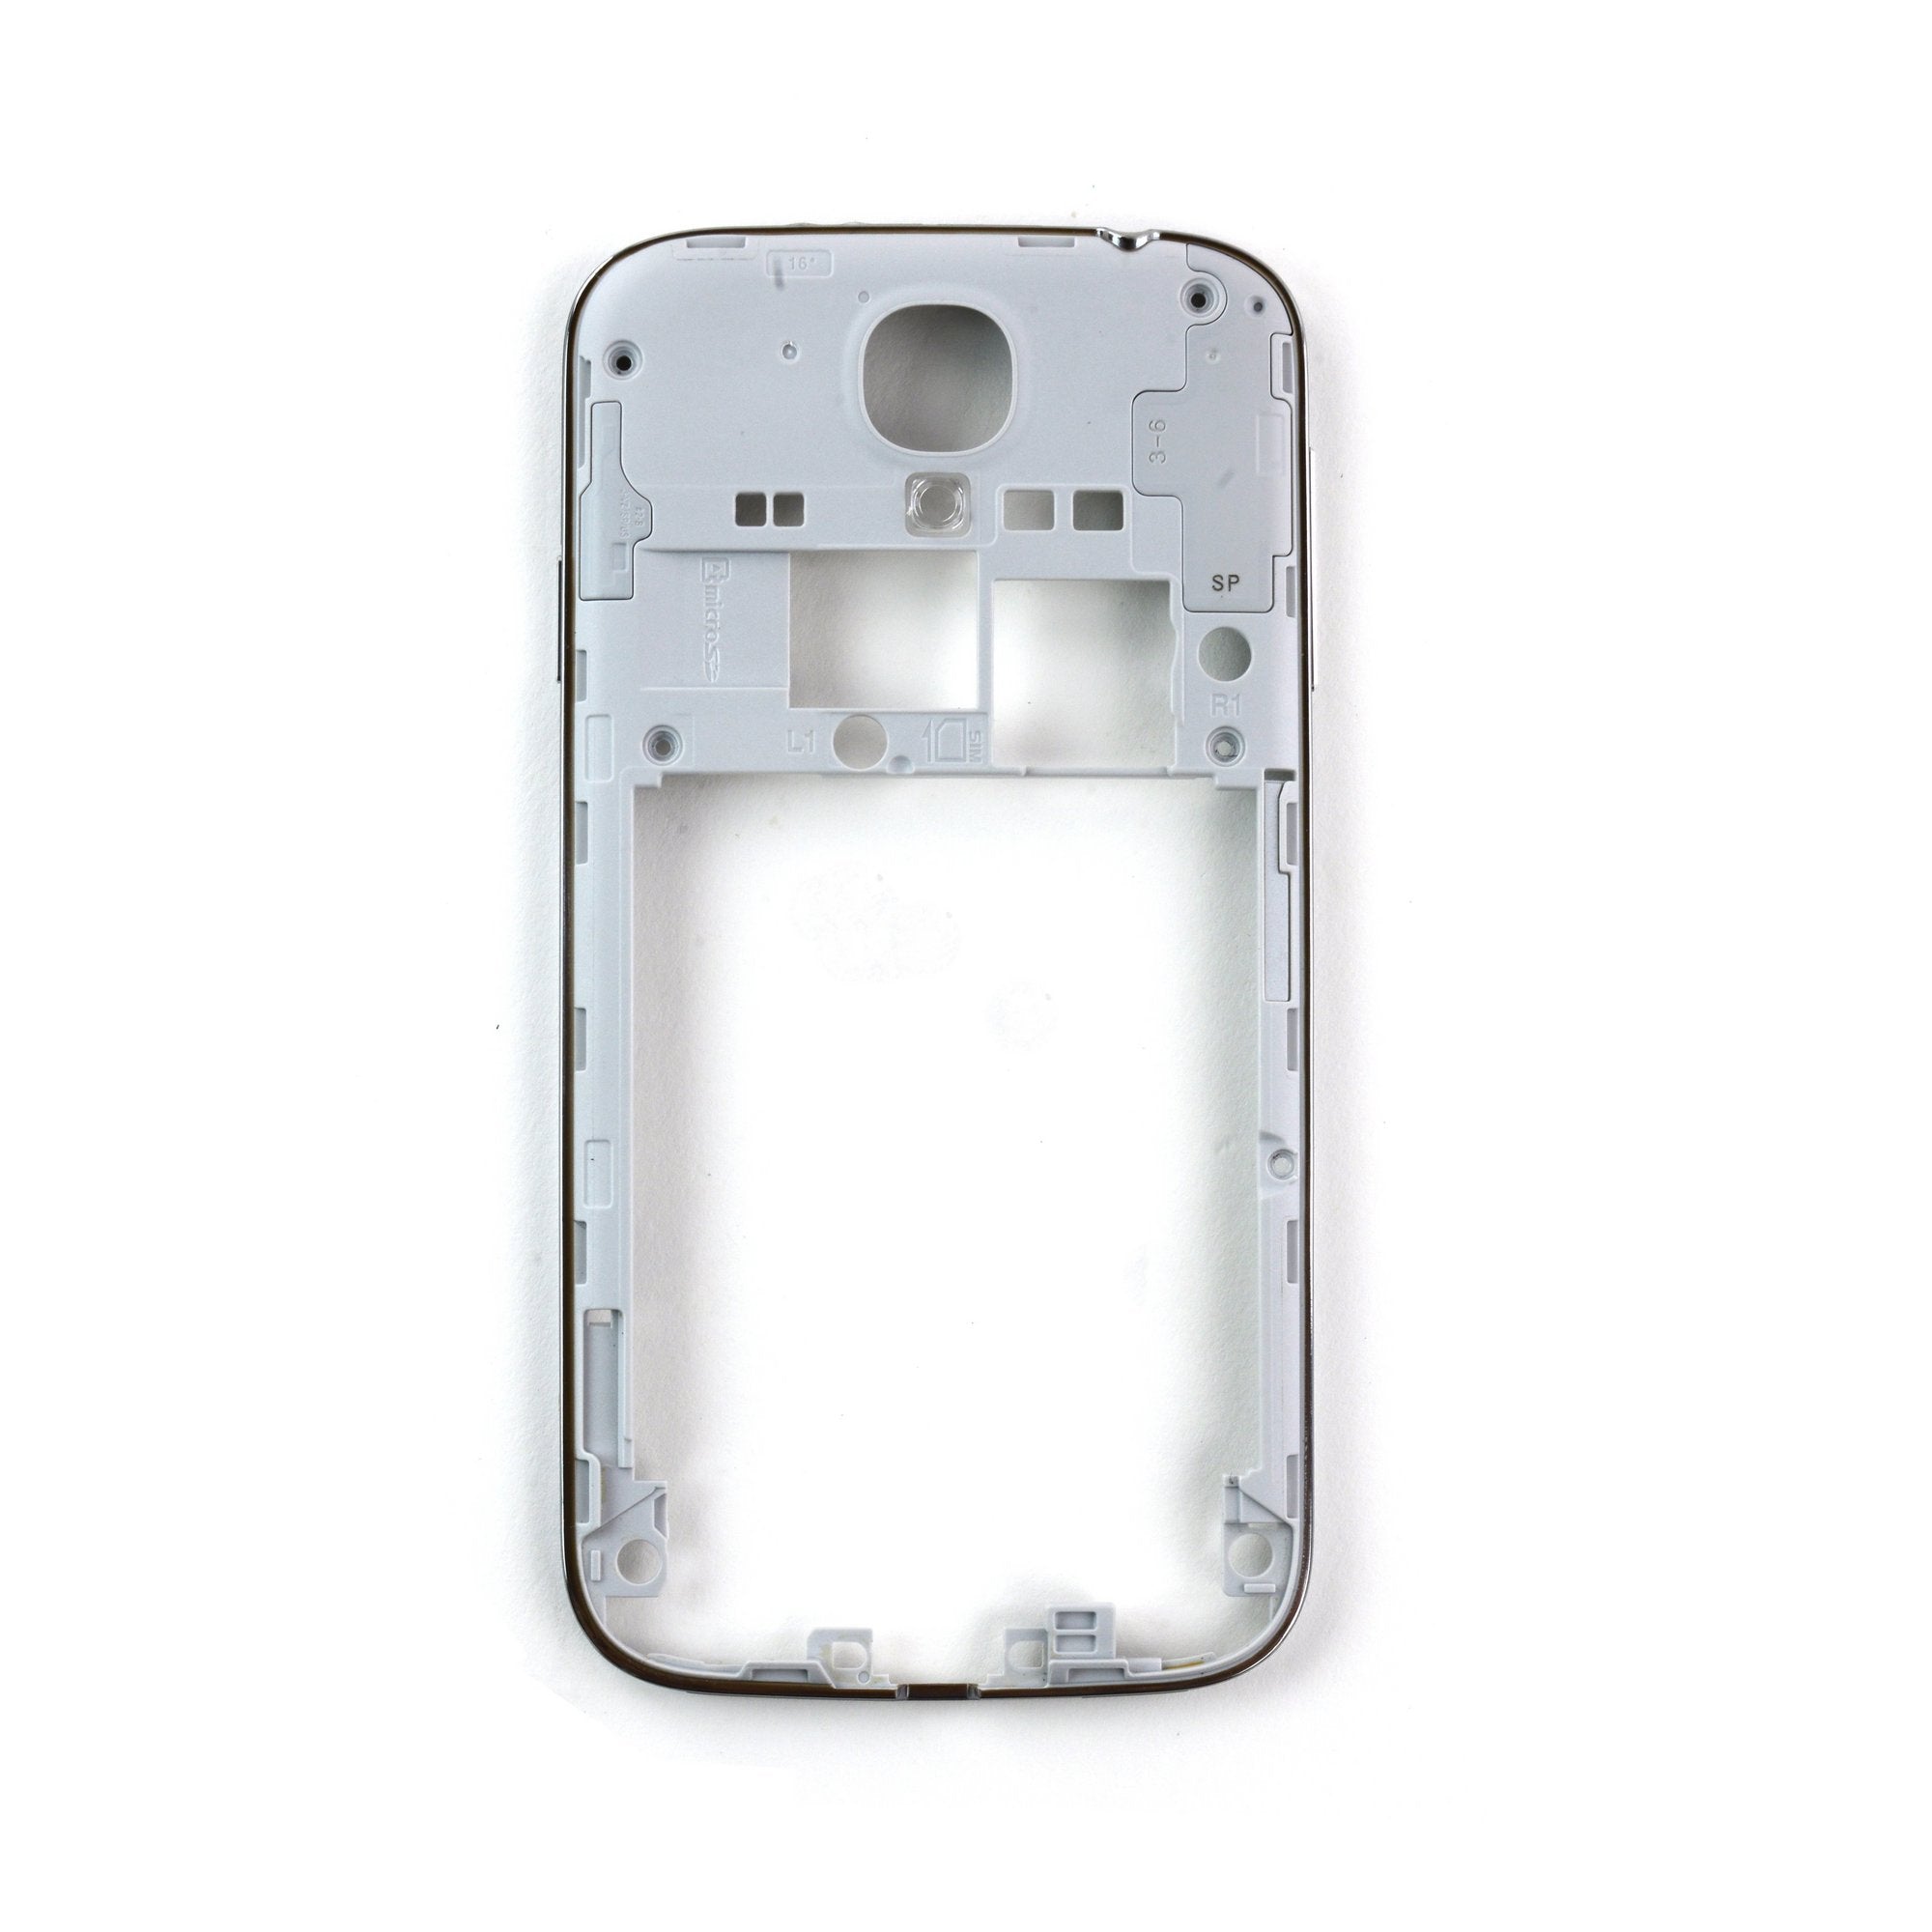 Galaxy S4 Midframe (Sprint/Verizon) White Used, A-Stock